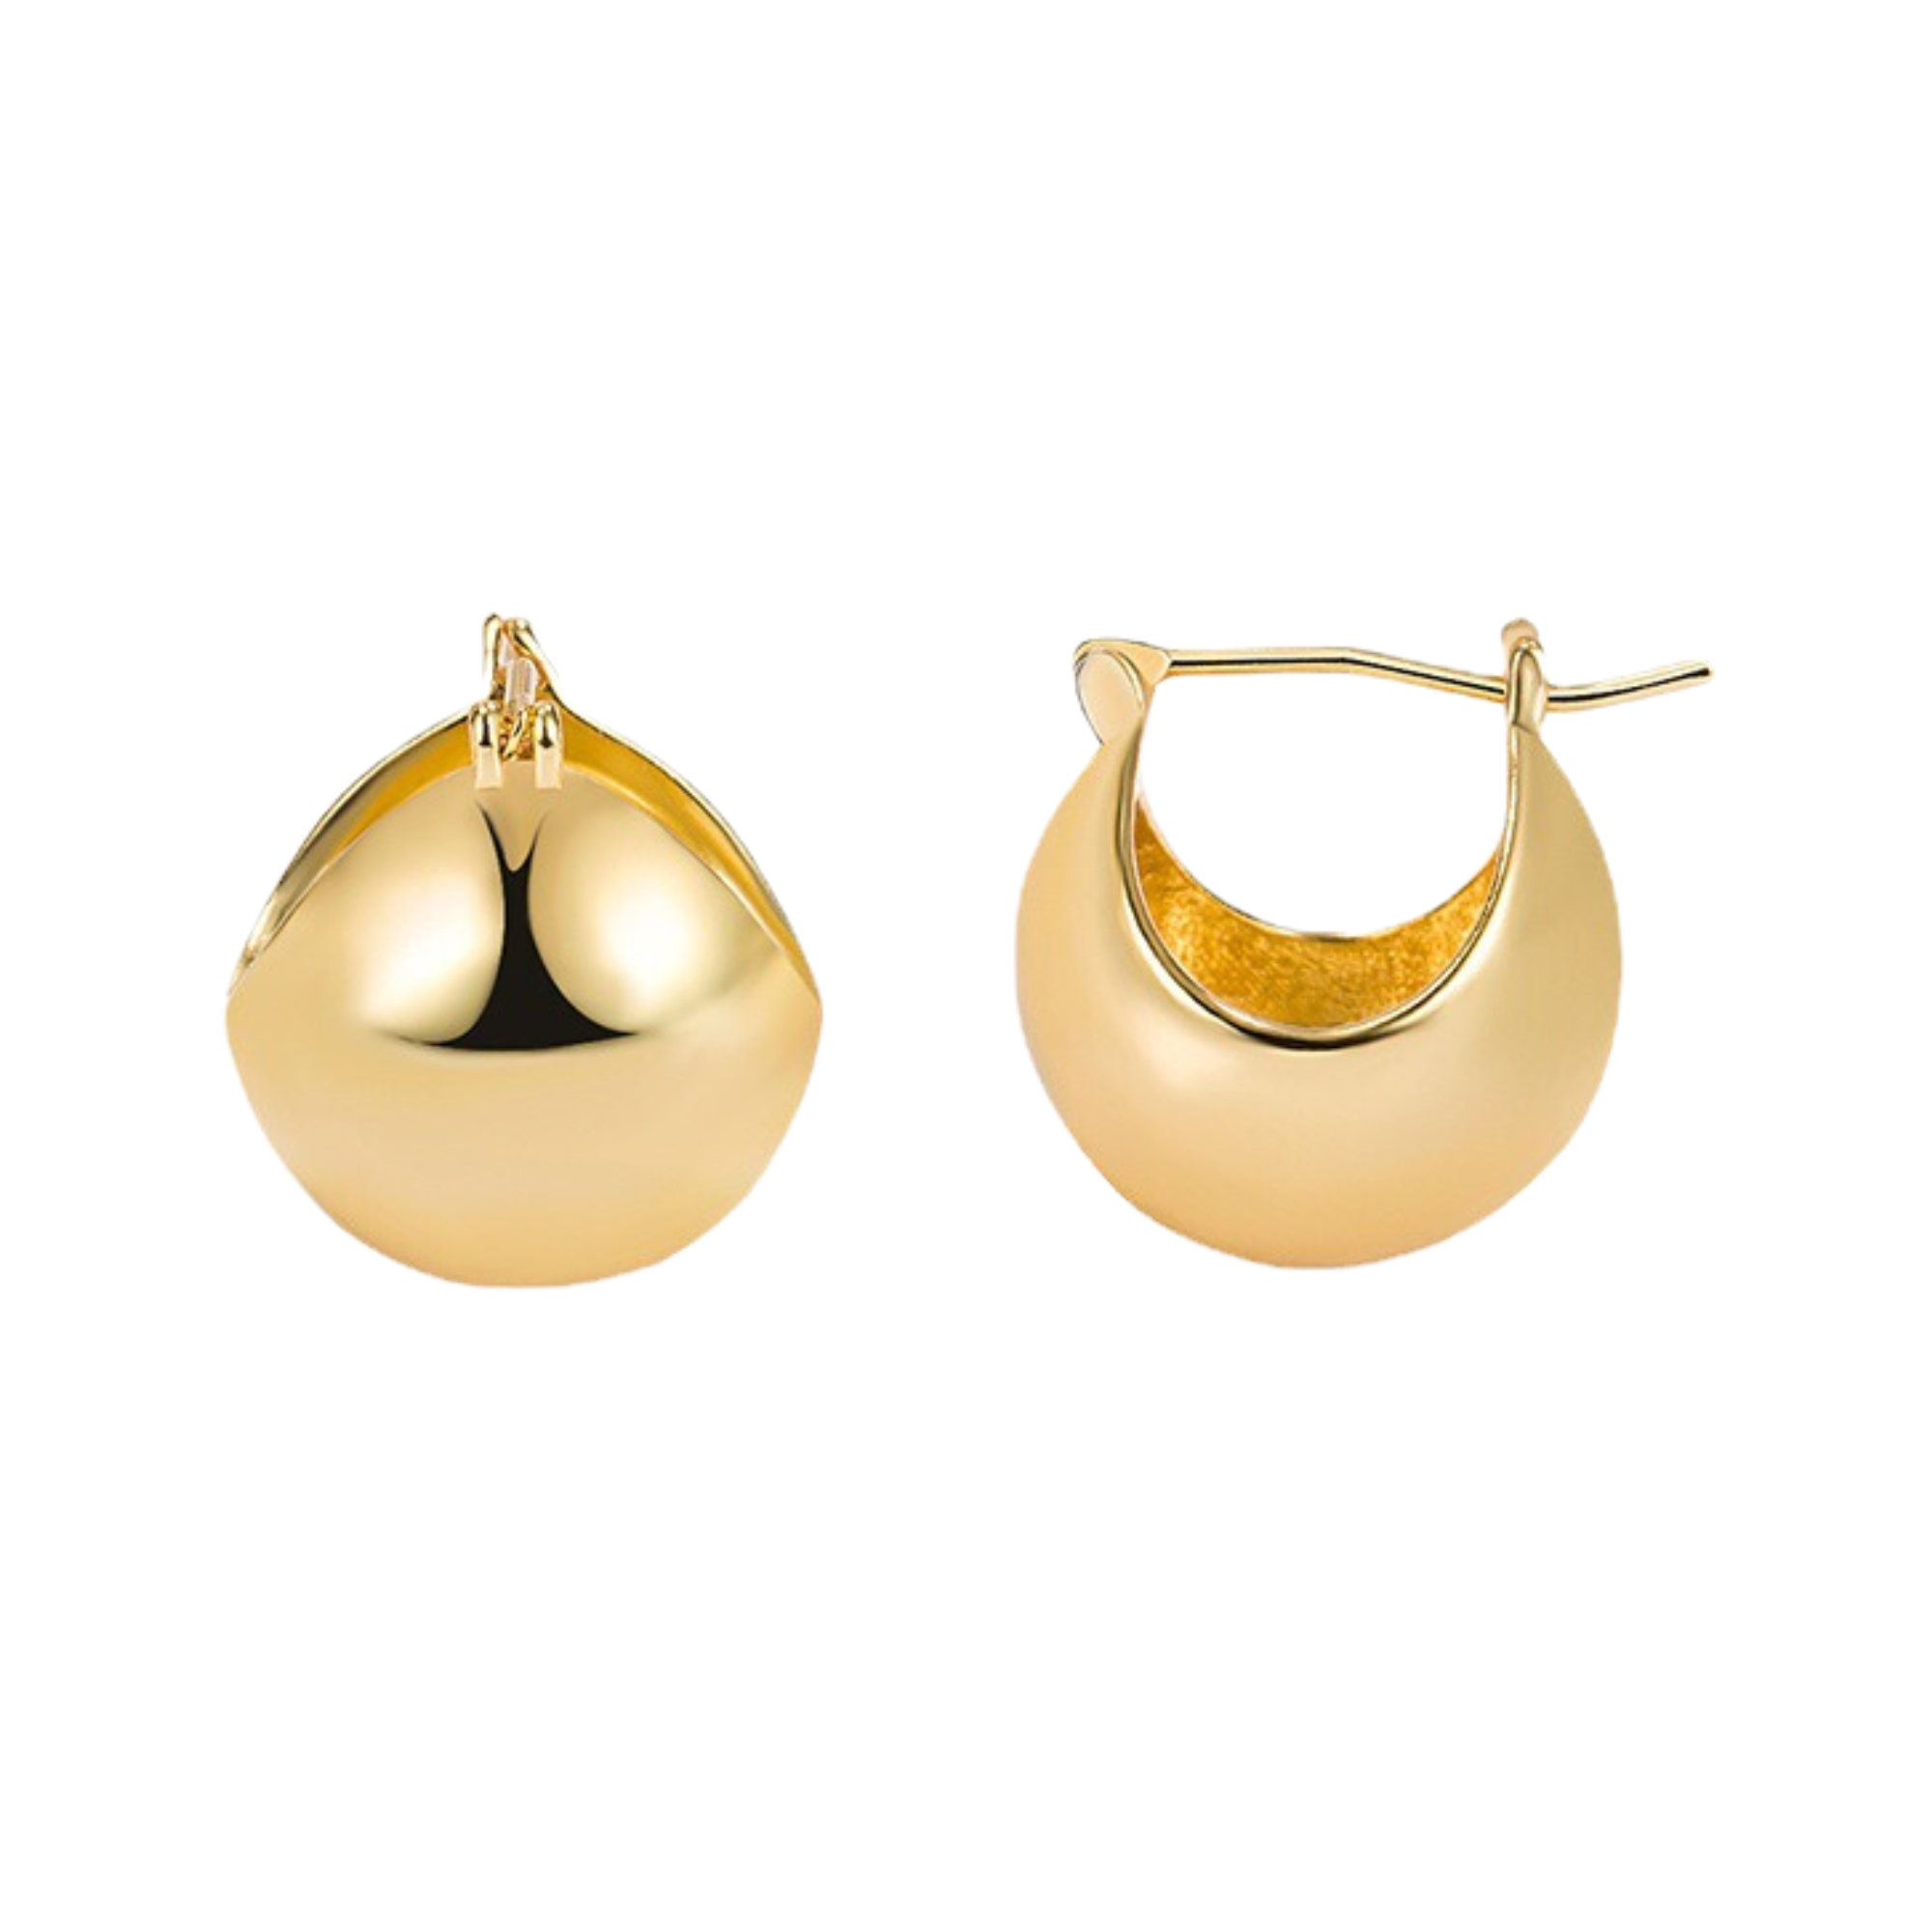 Hollow Ball Huggie Earrings - Pre Order: Ships Feb 29